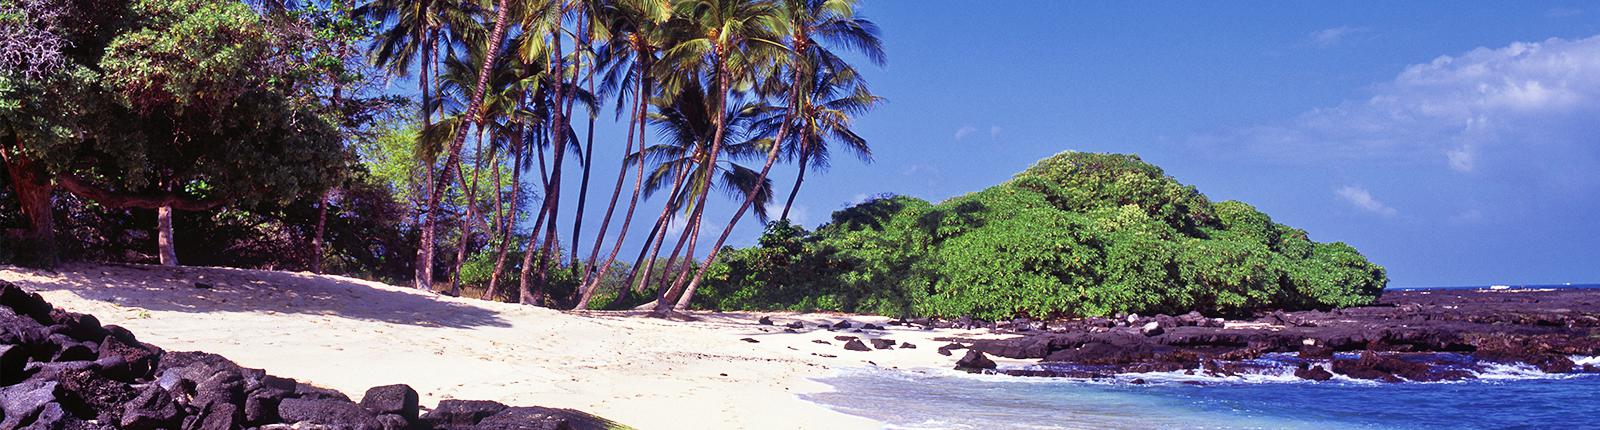 Beautiful daytime shot of a beach in Kona, Hawaii